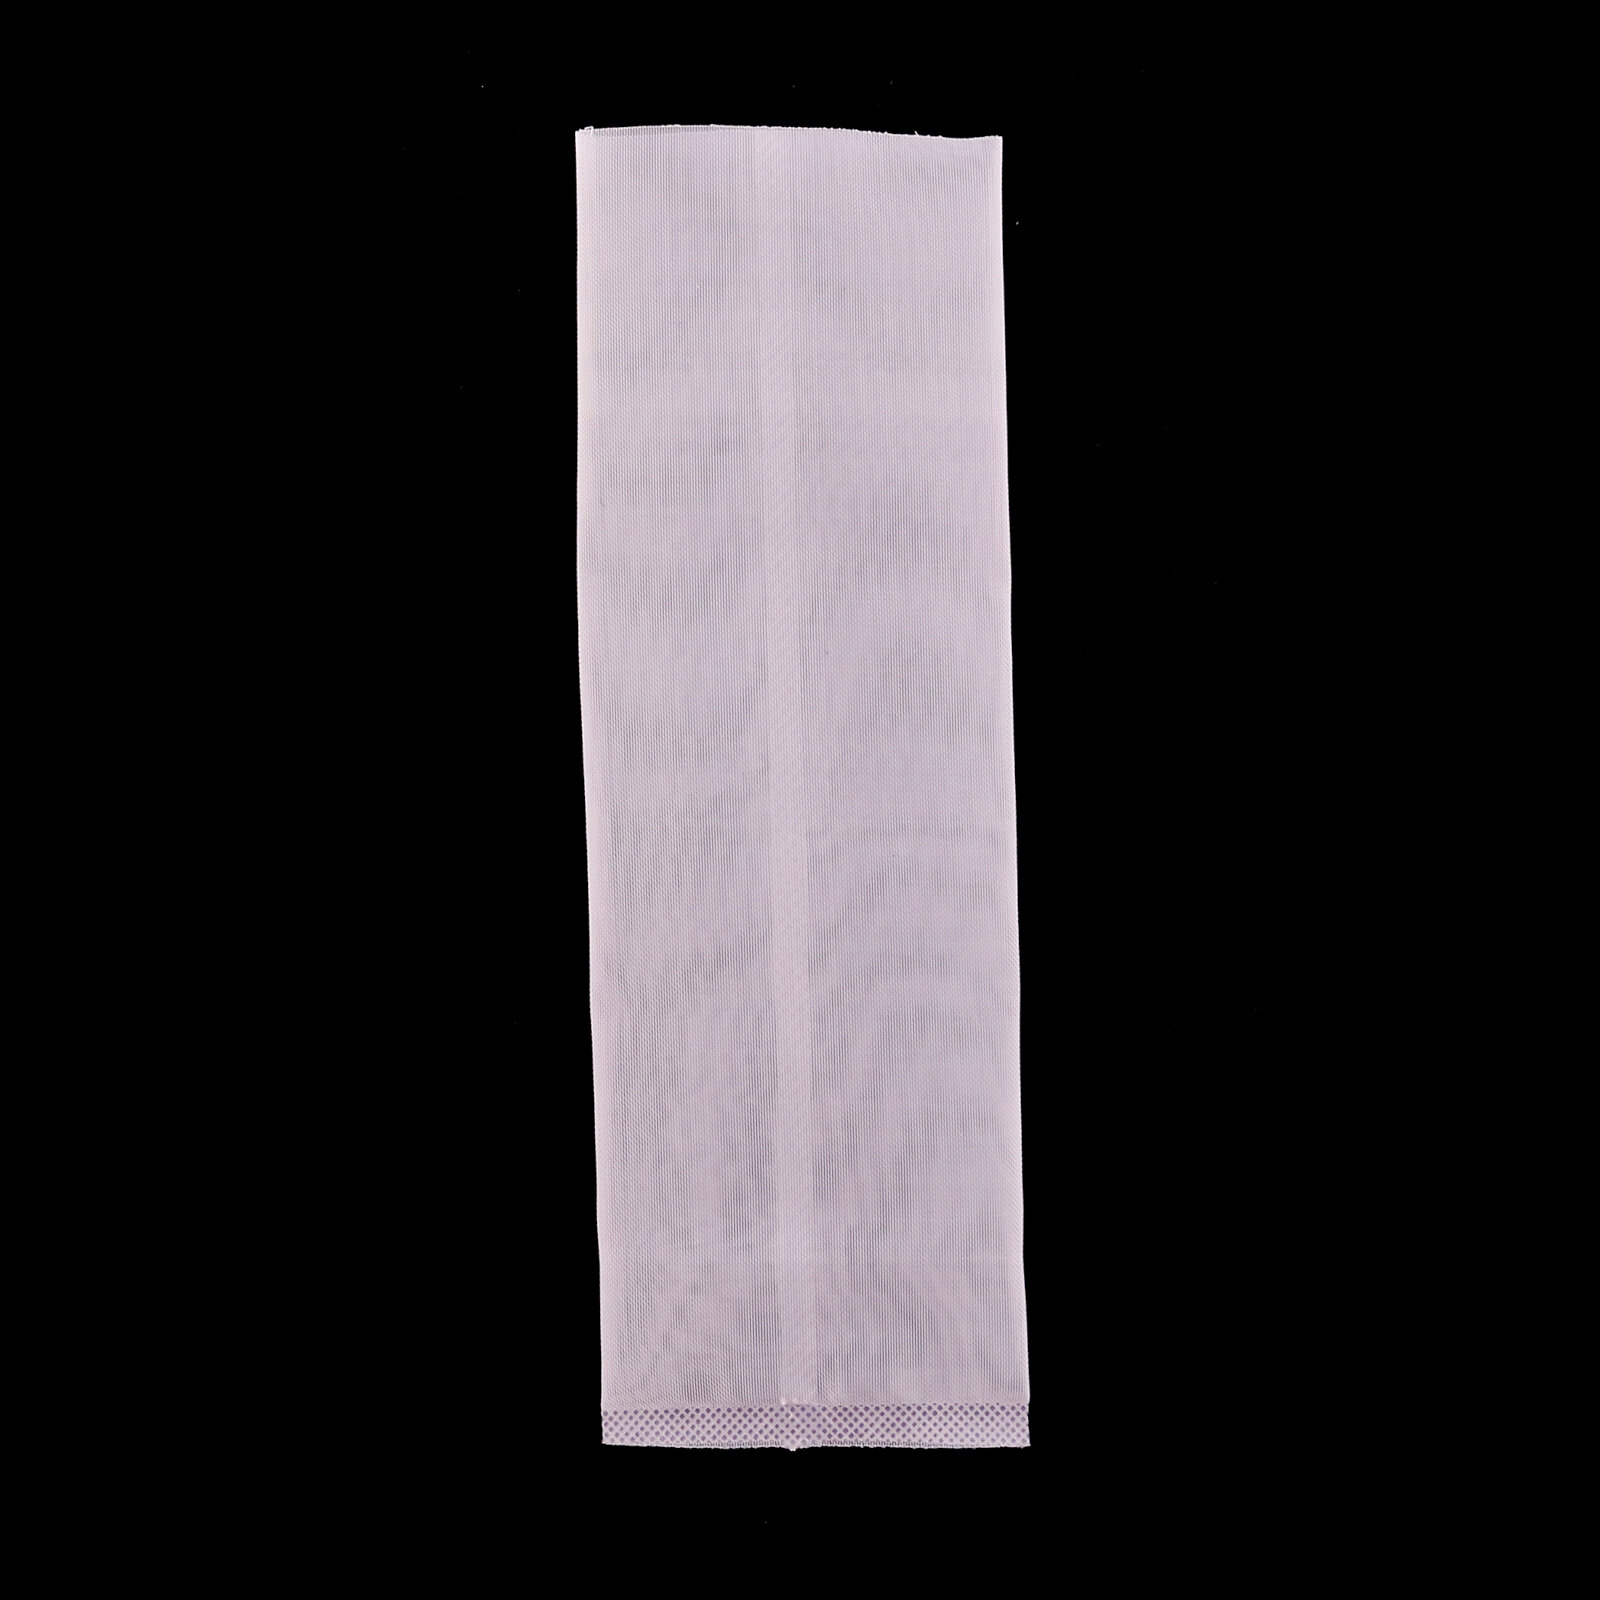 10 Stk. Rosin Bags 5 x 11cm | versch. µm Siebgrößen